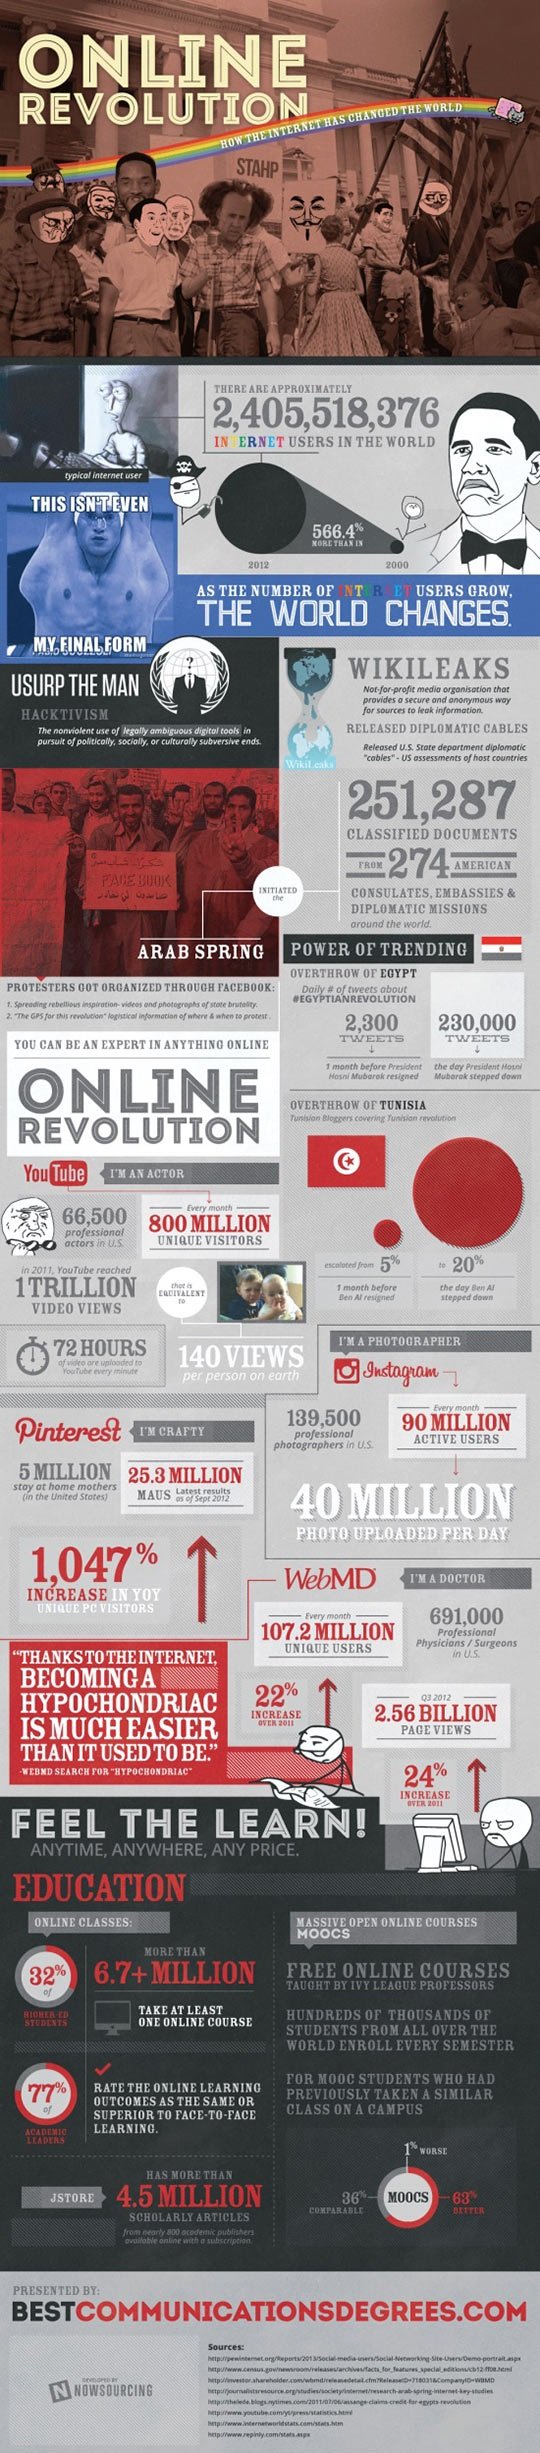 Online Revolution Infographic